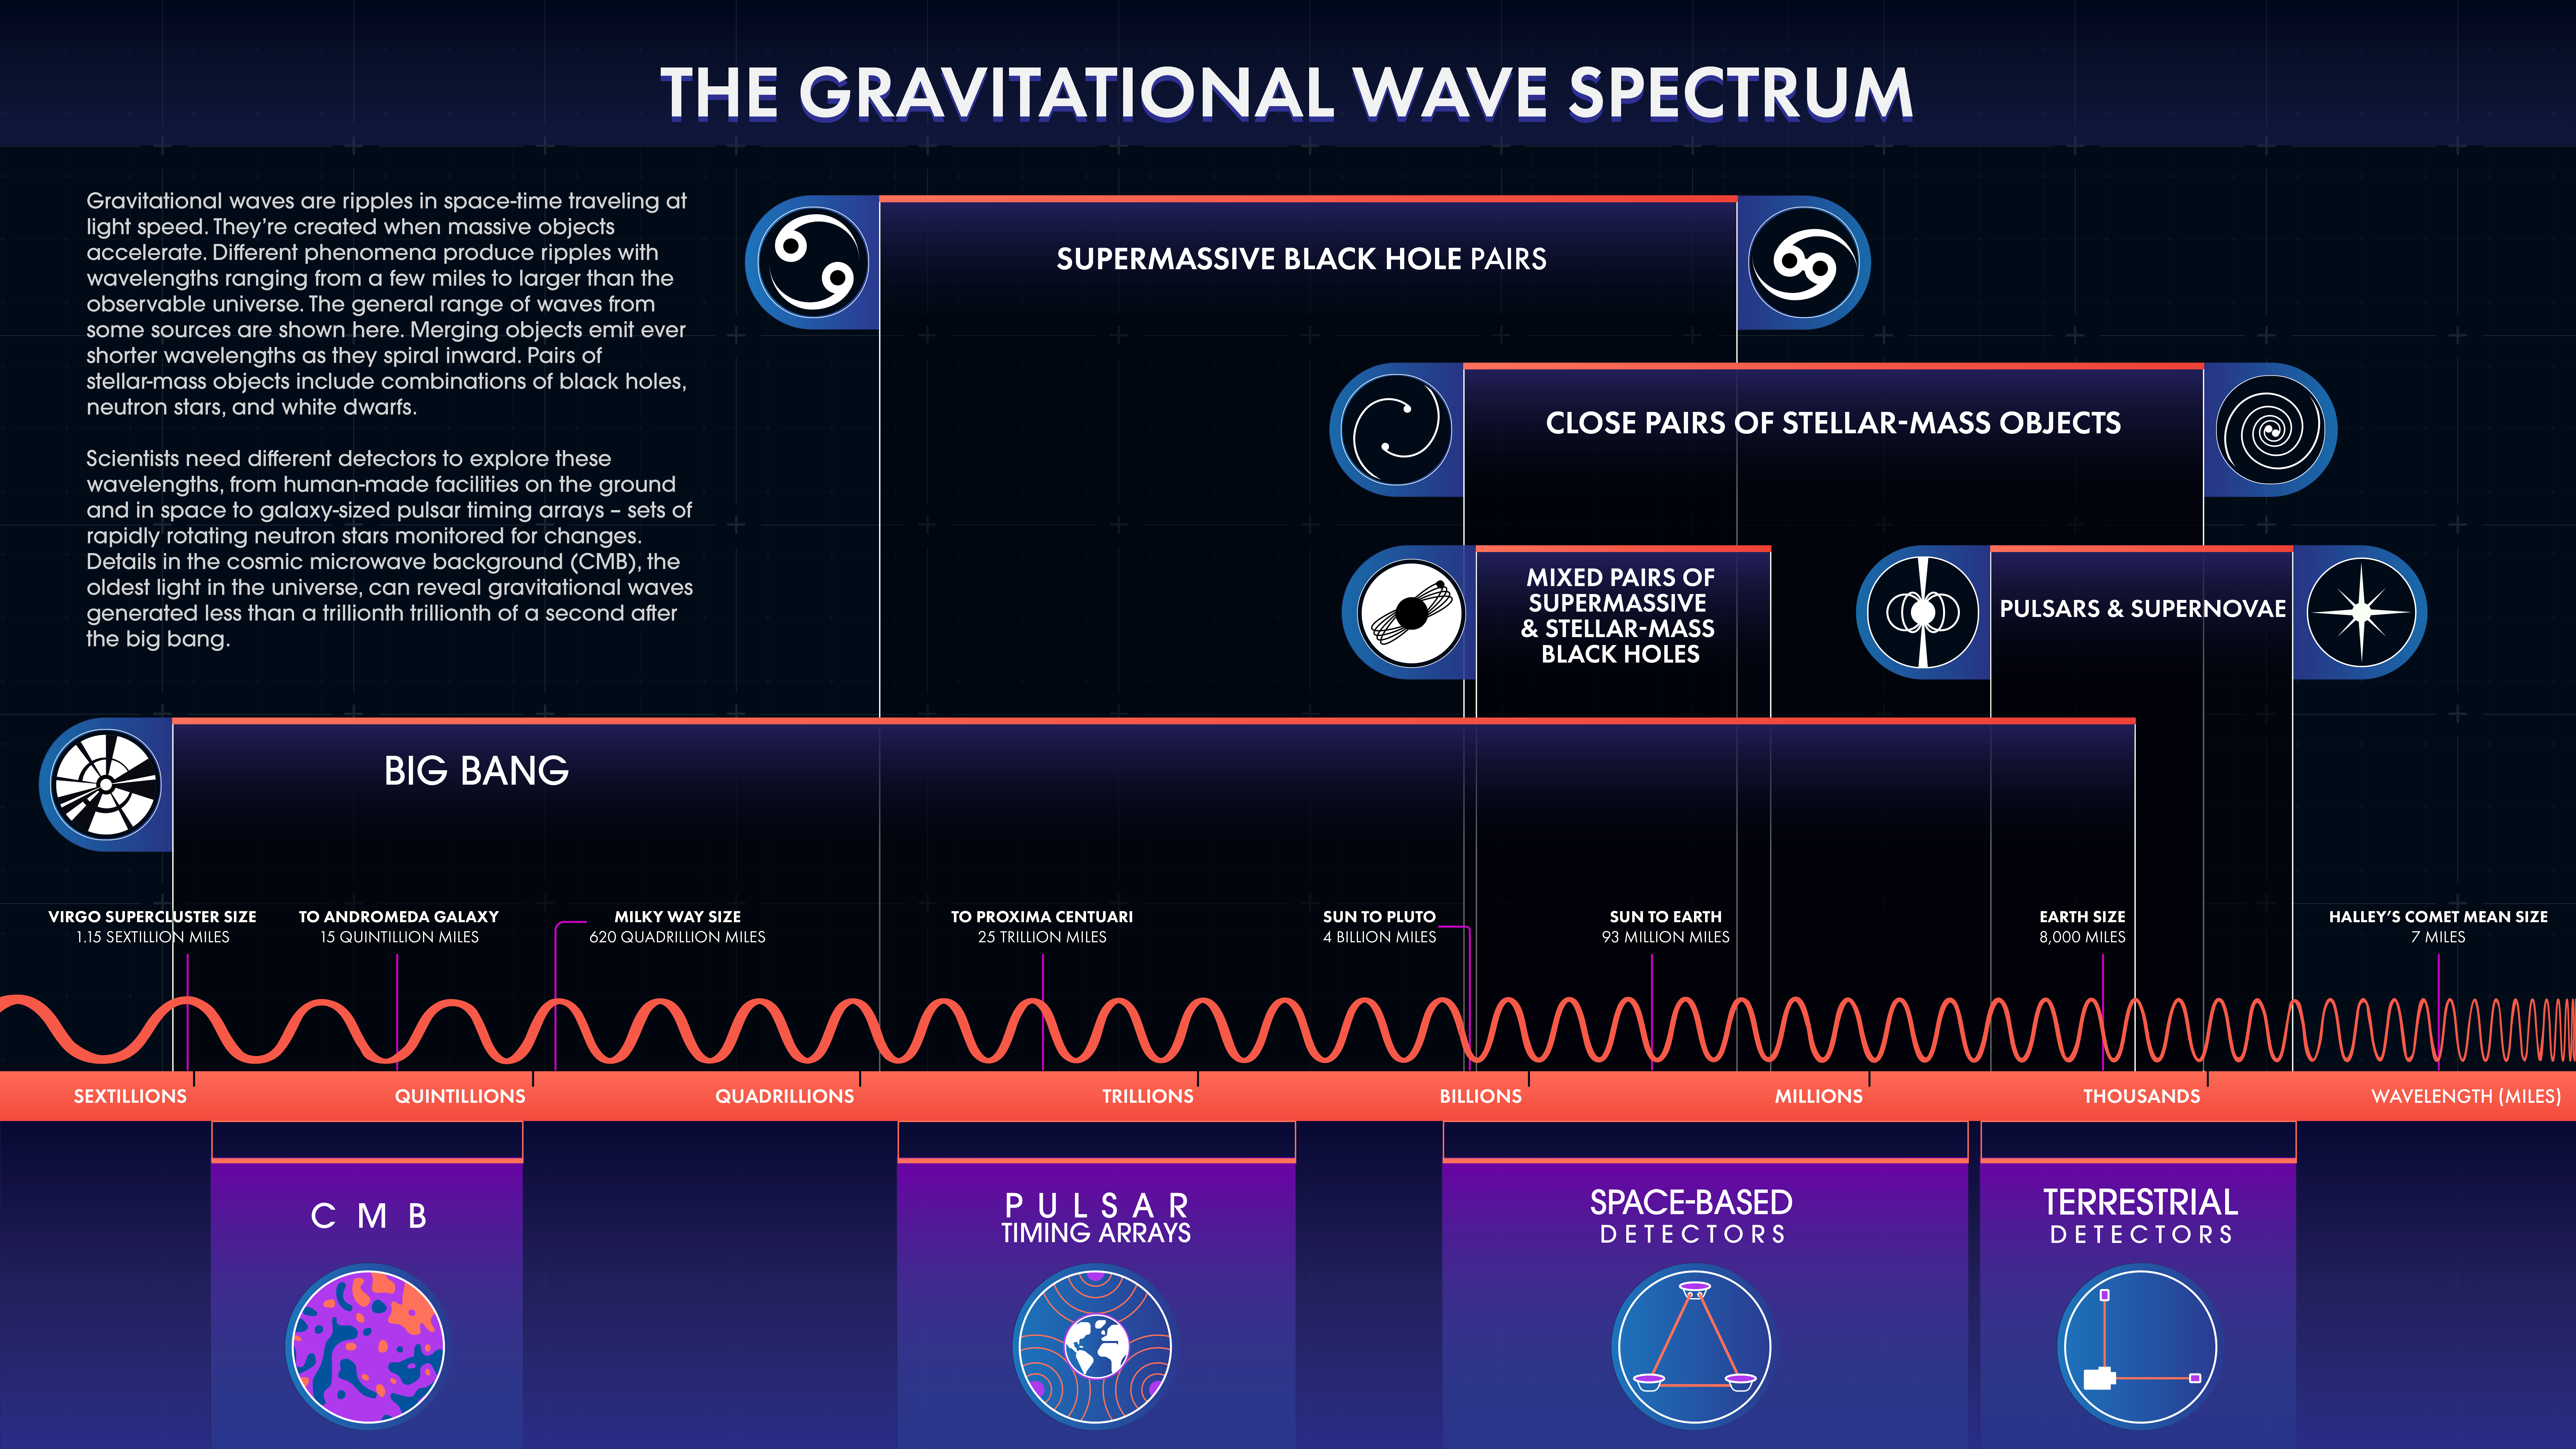 Gravitational wave spectrum infographic